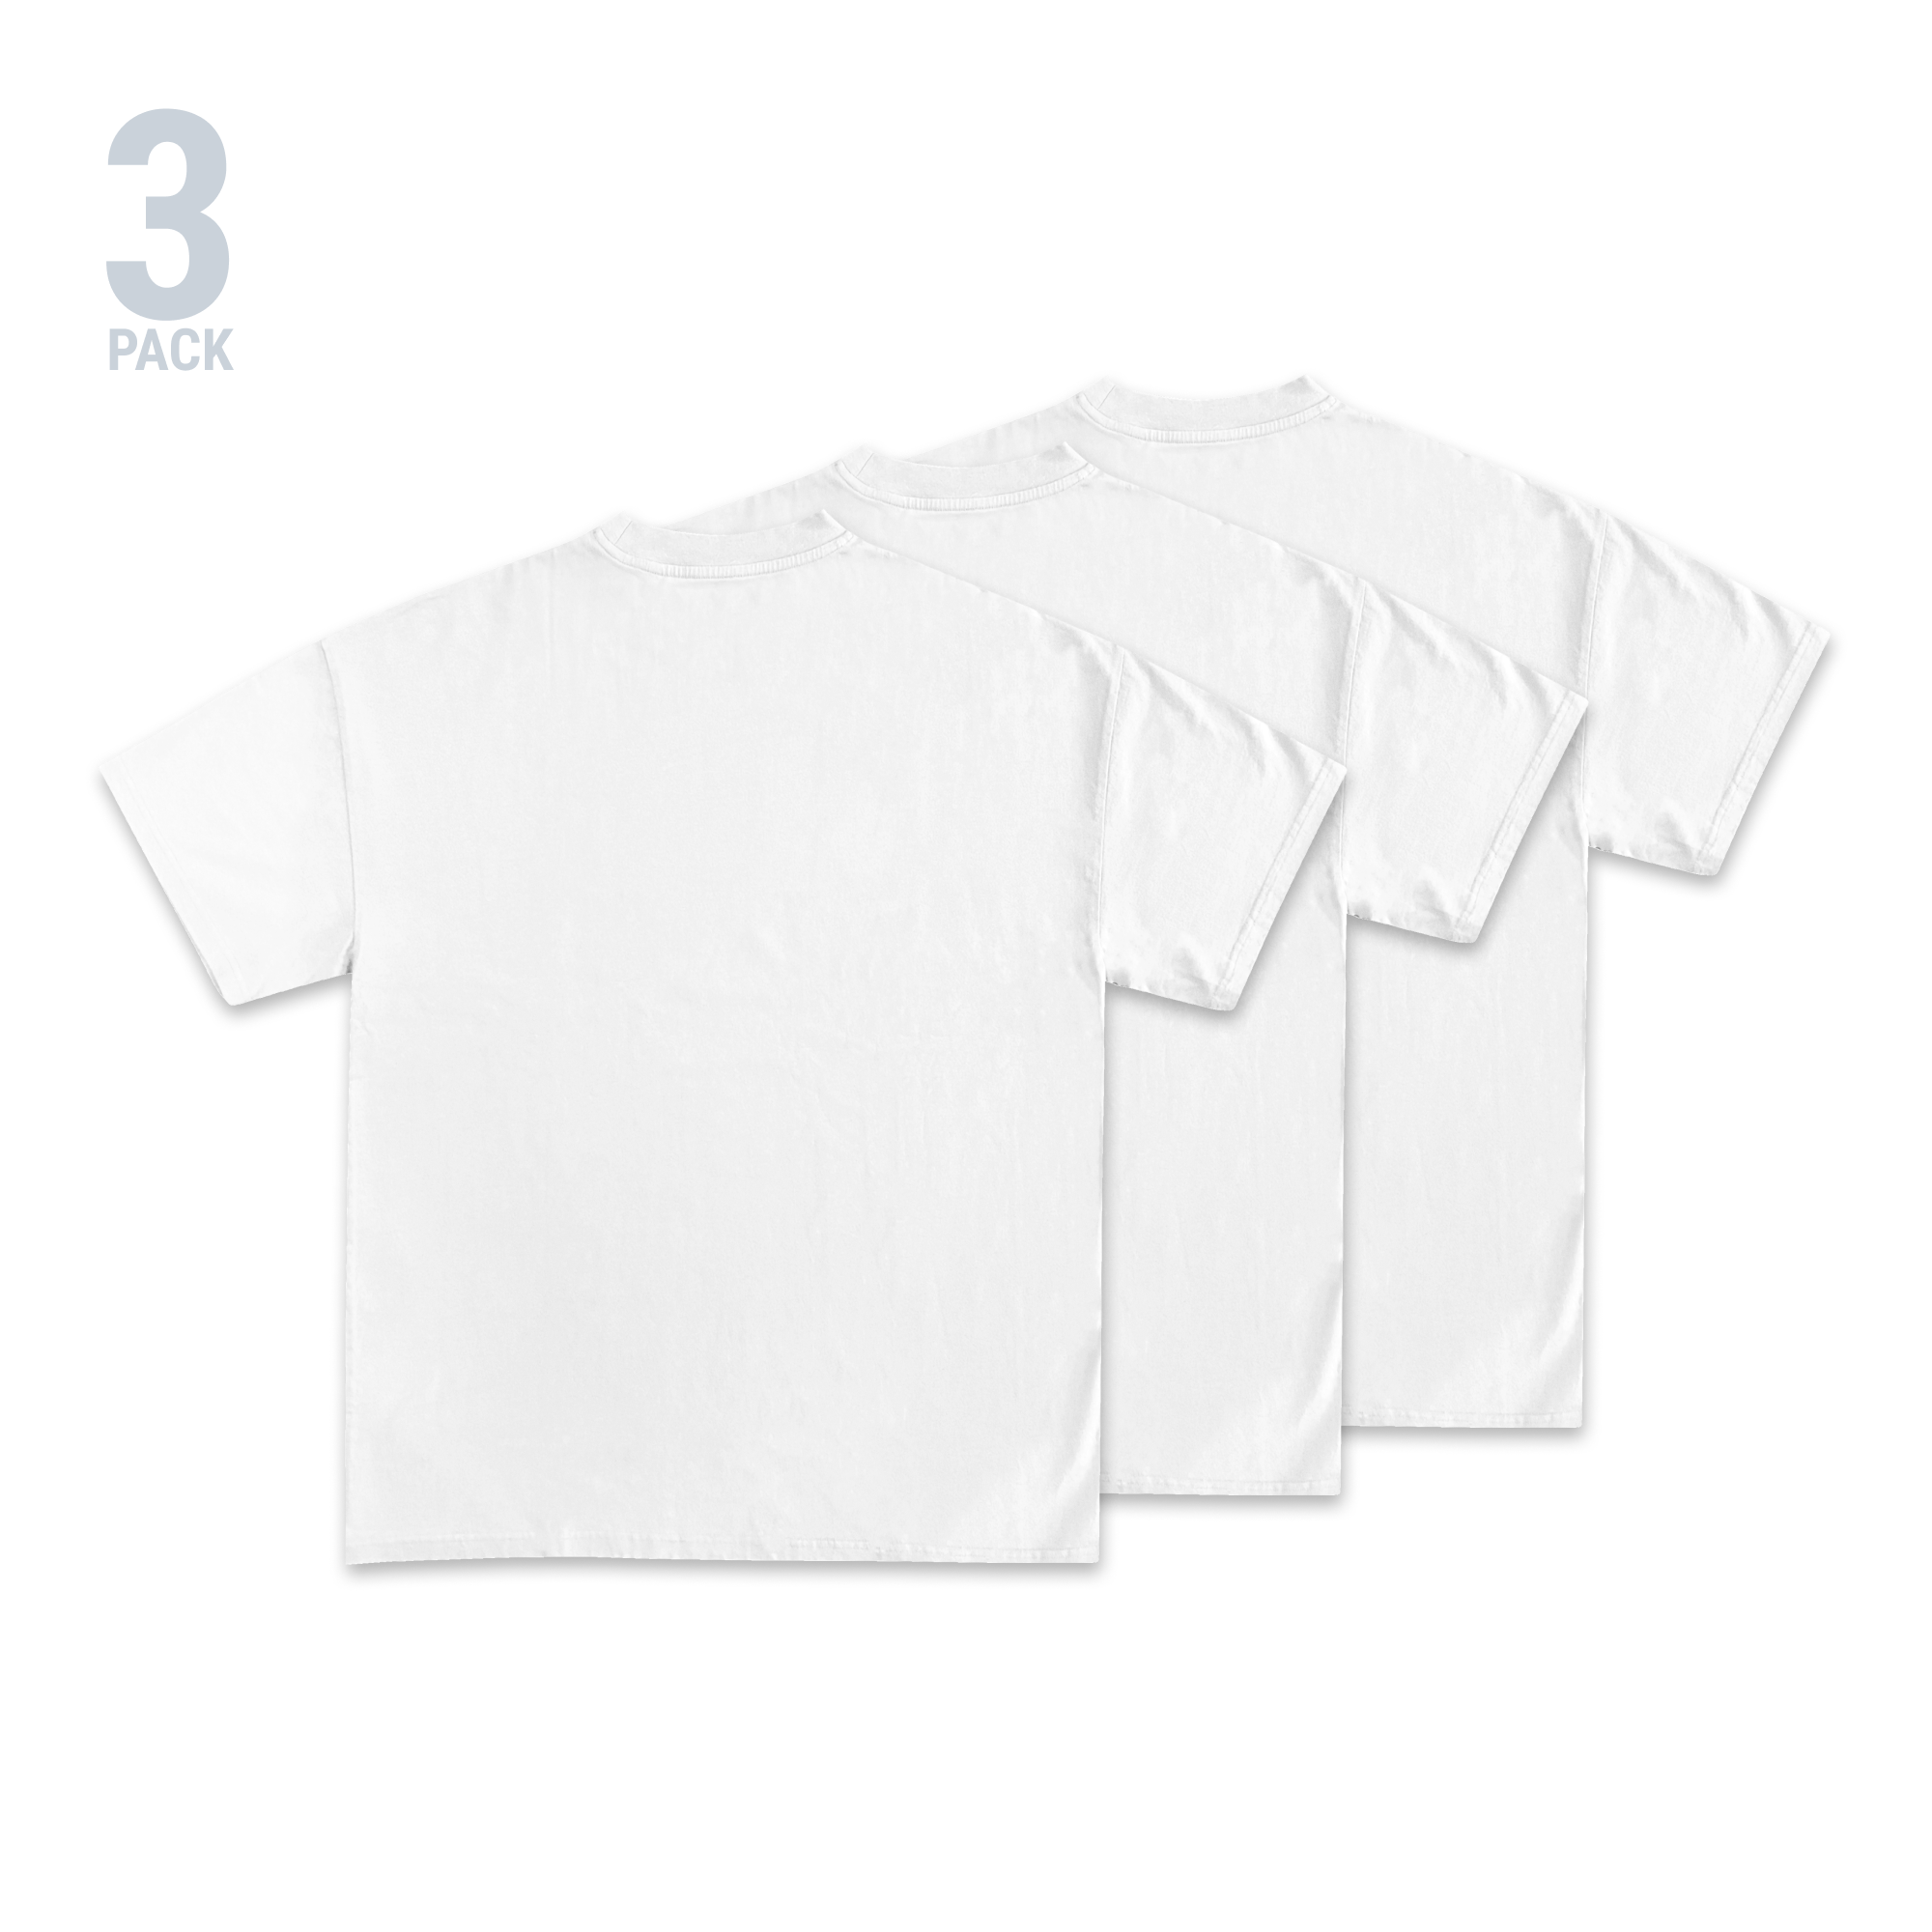 Icy Men's 3-Pack Heavyweight Blank T-Shirt (White)